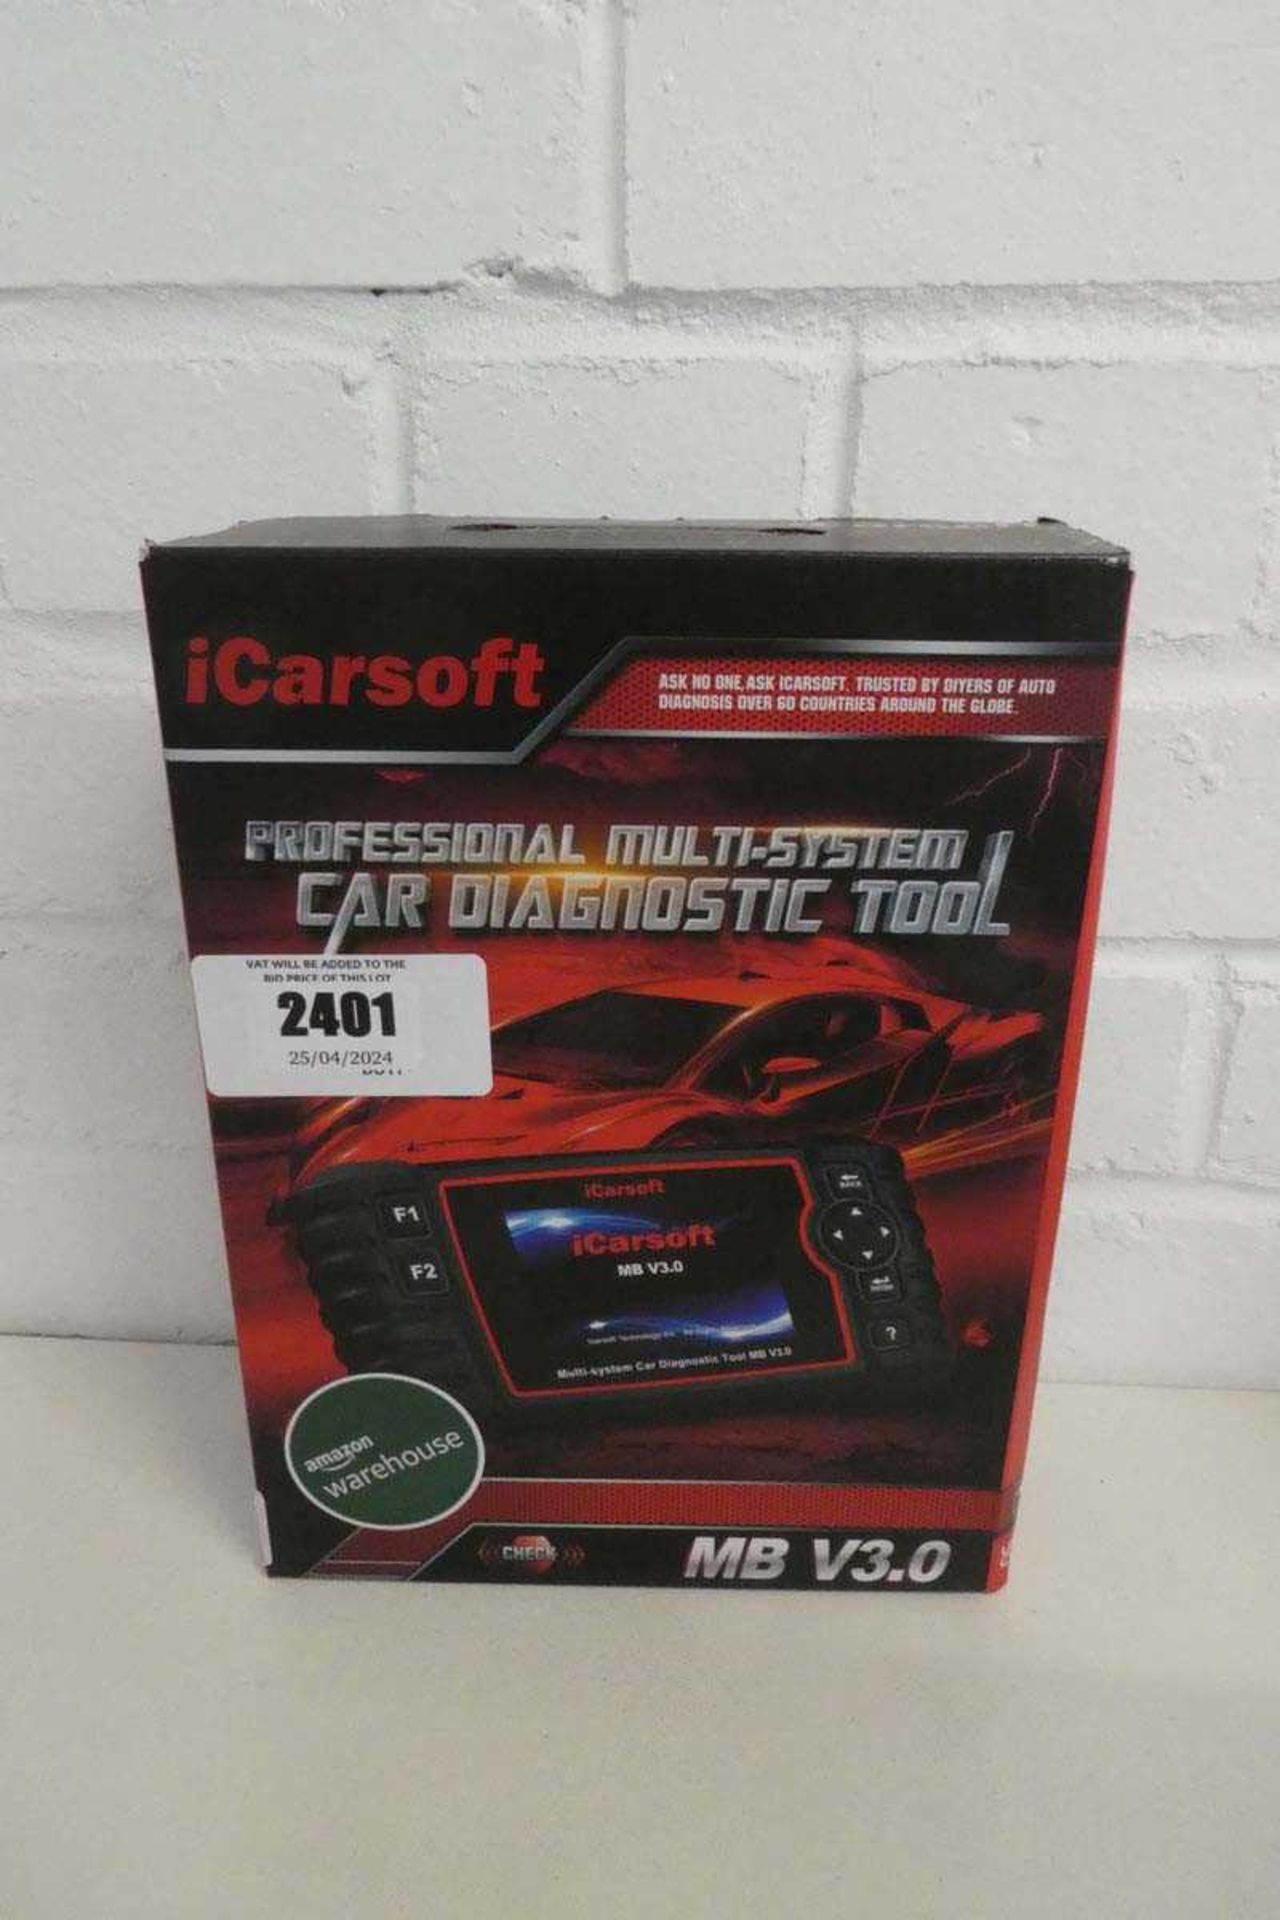 +VAT Boxed iCarsoft MB V3.0 professional multi-system car diagnostic tool